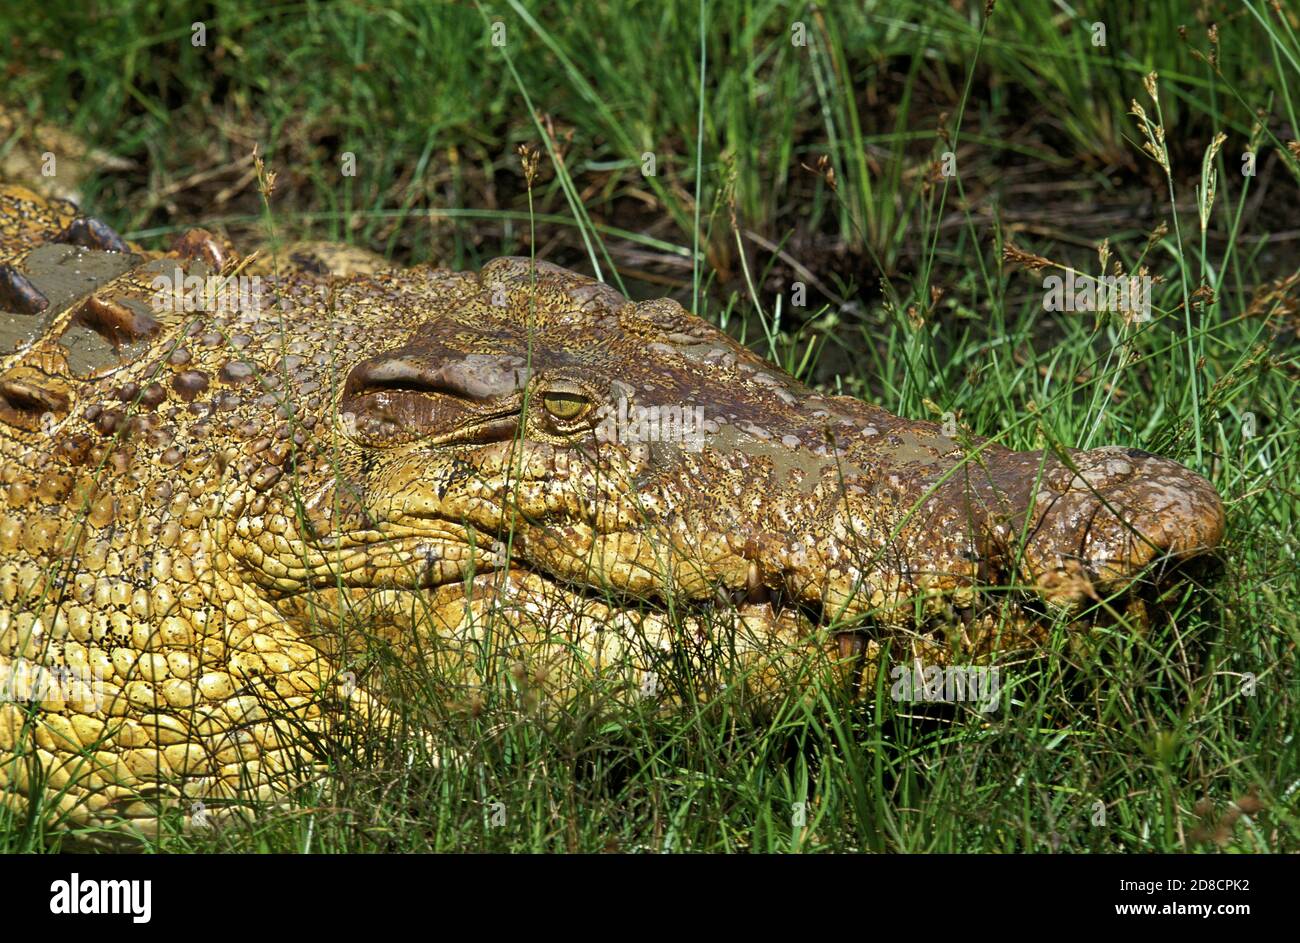 AUSTRALIAN SALWATER CROCODILE OR ESTUARINE crocodylus porosus, AUSTRALIA Photo - Alamy